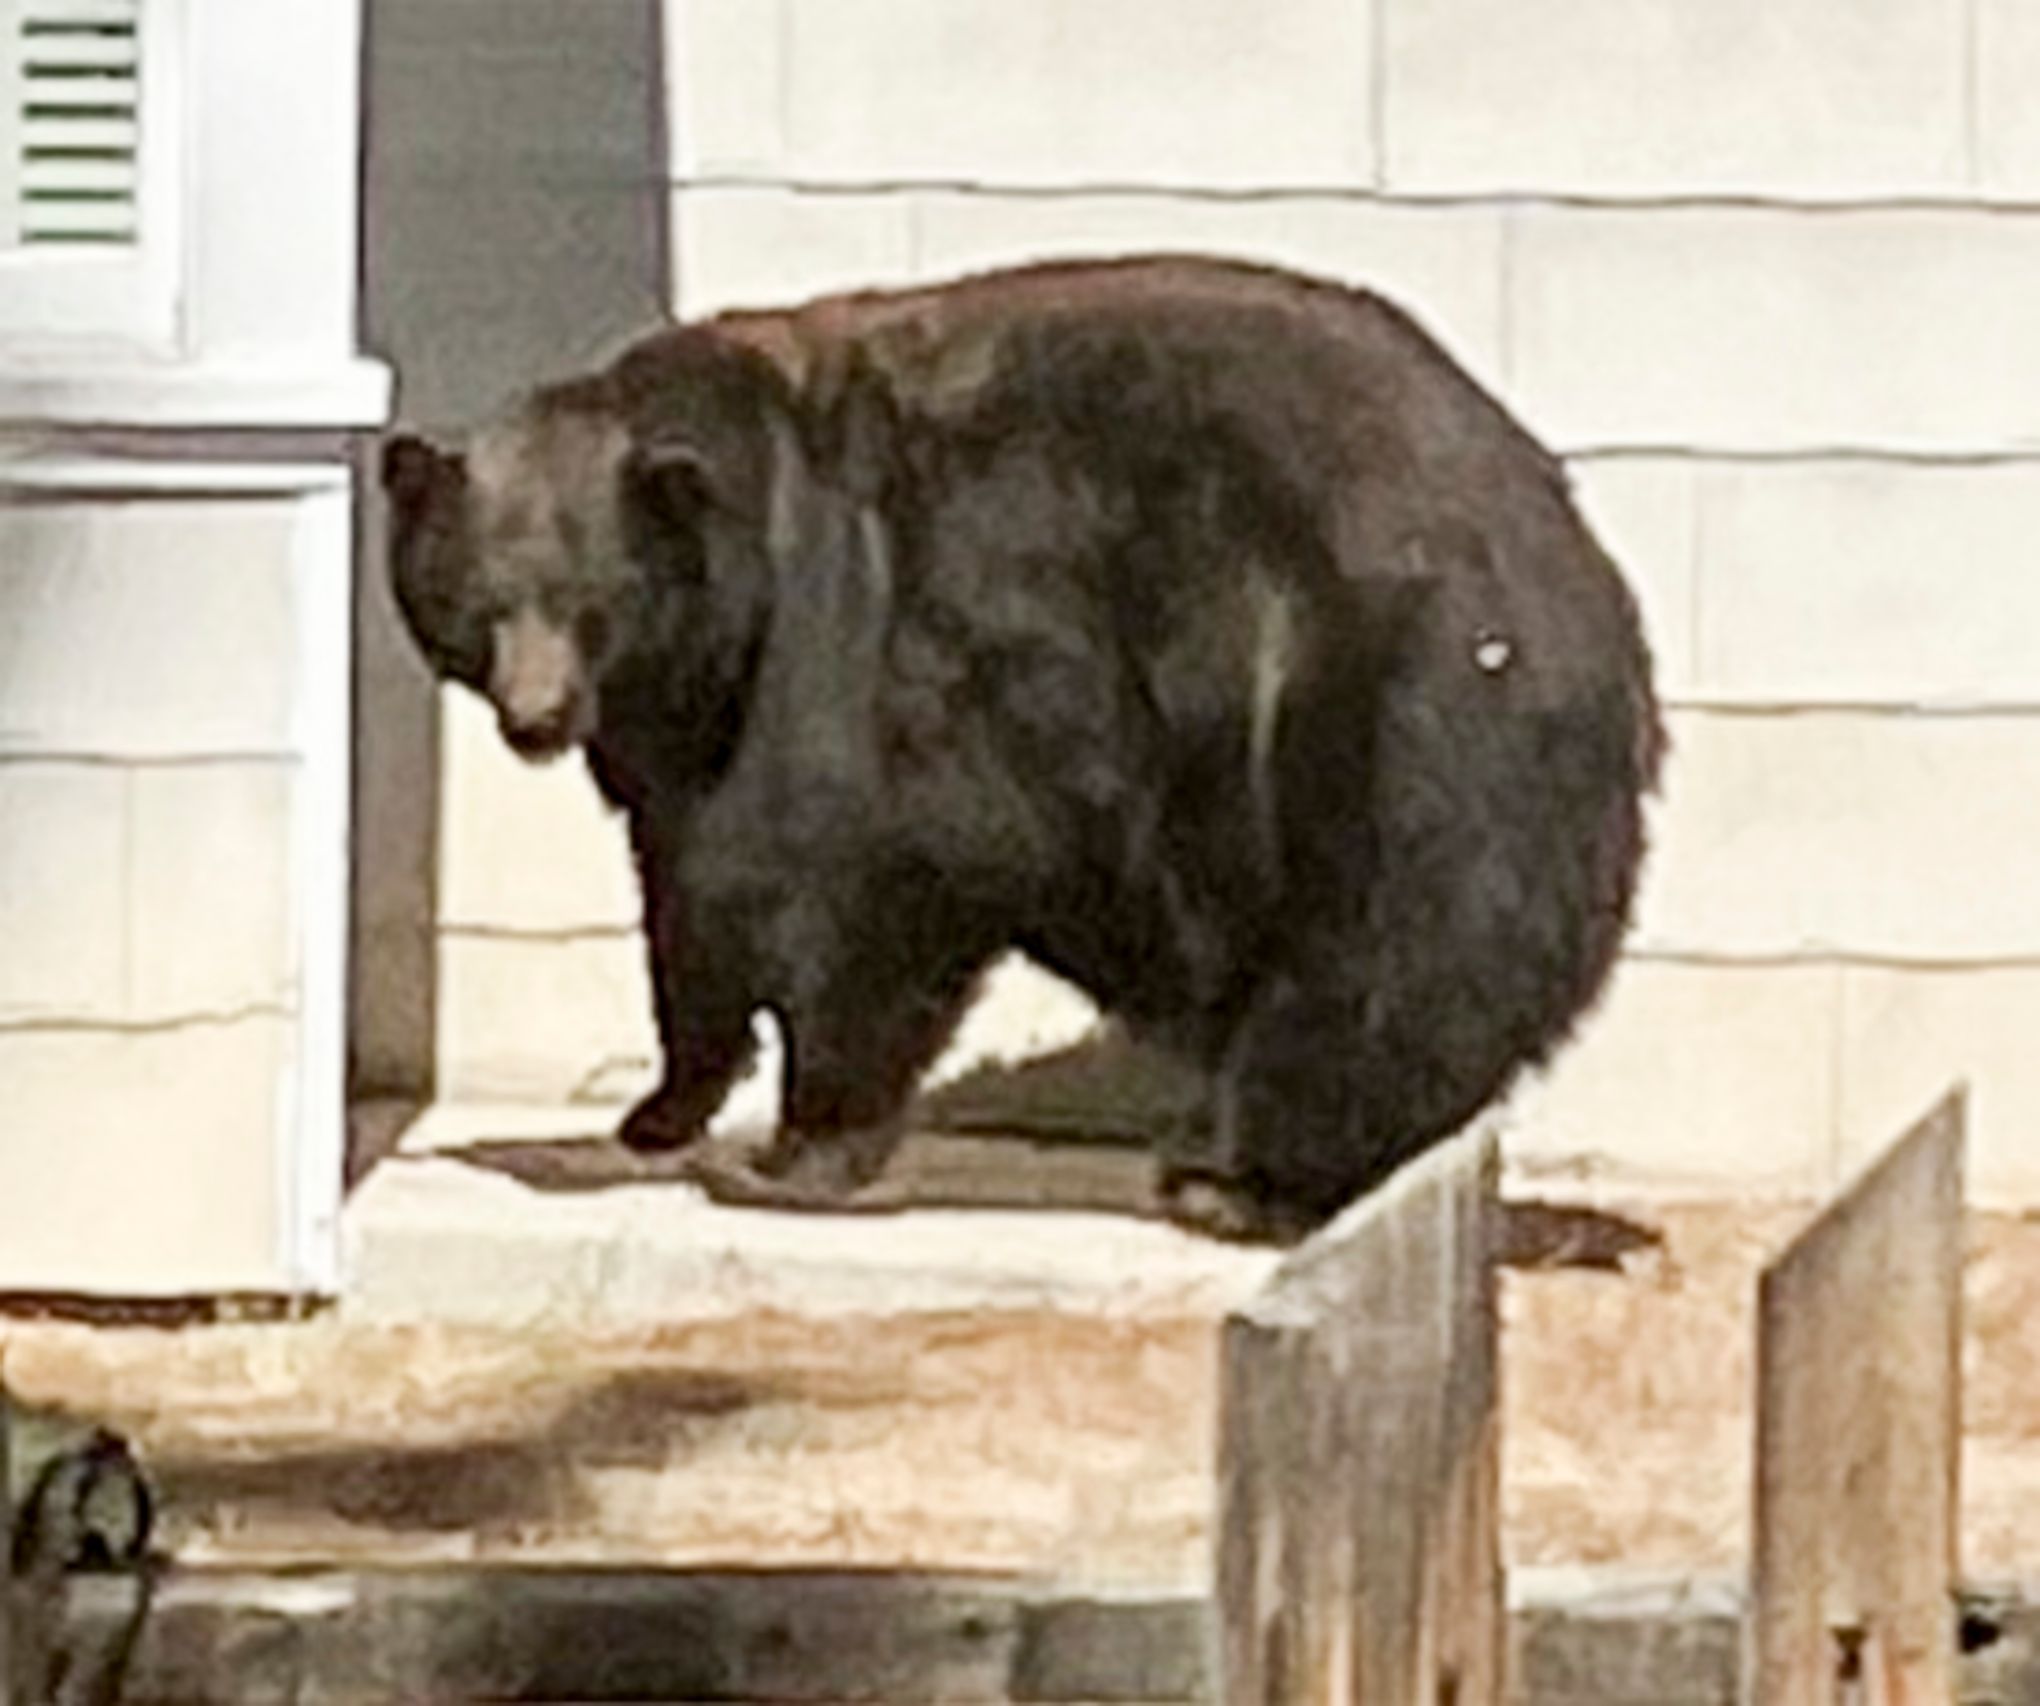 Hank the Tank, a 400-pound bear behind Lake Tahoe break-ins, is captured